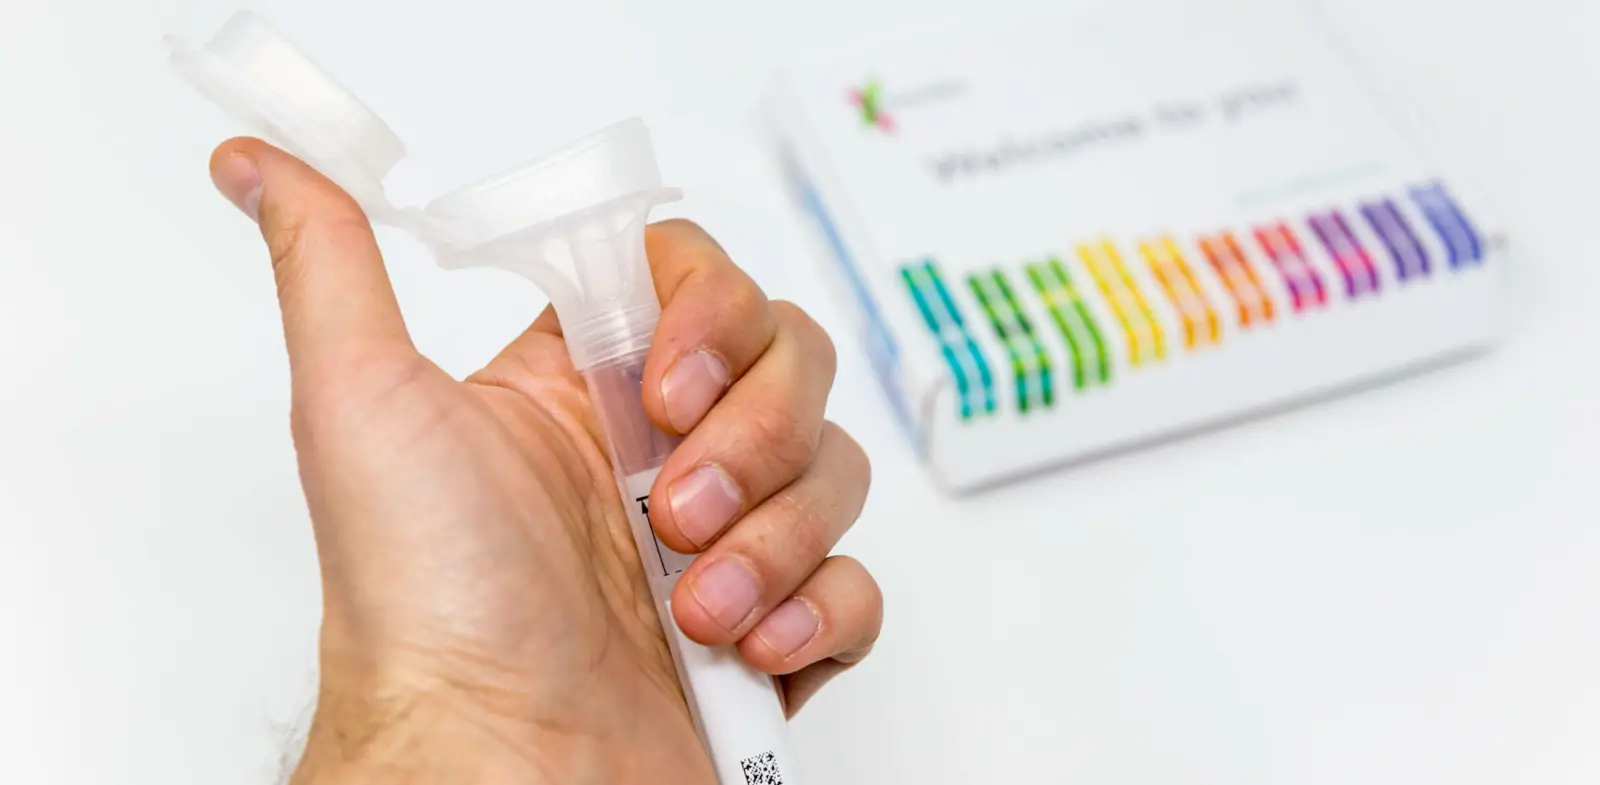 23andme.com testing kit, DNA testing kit